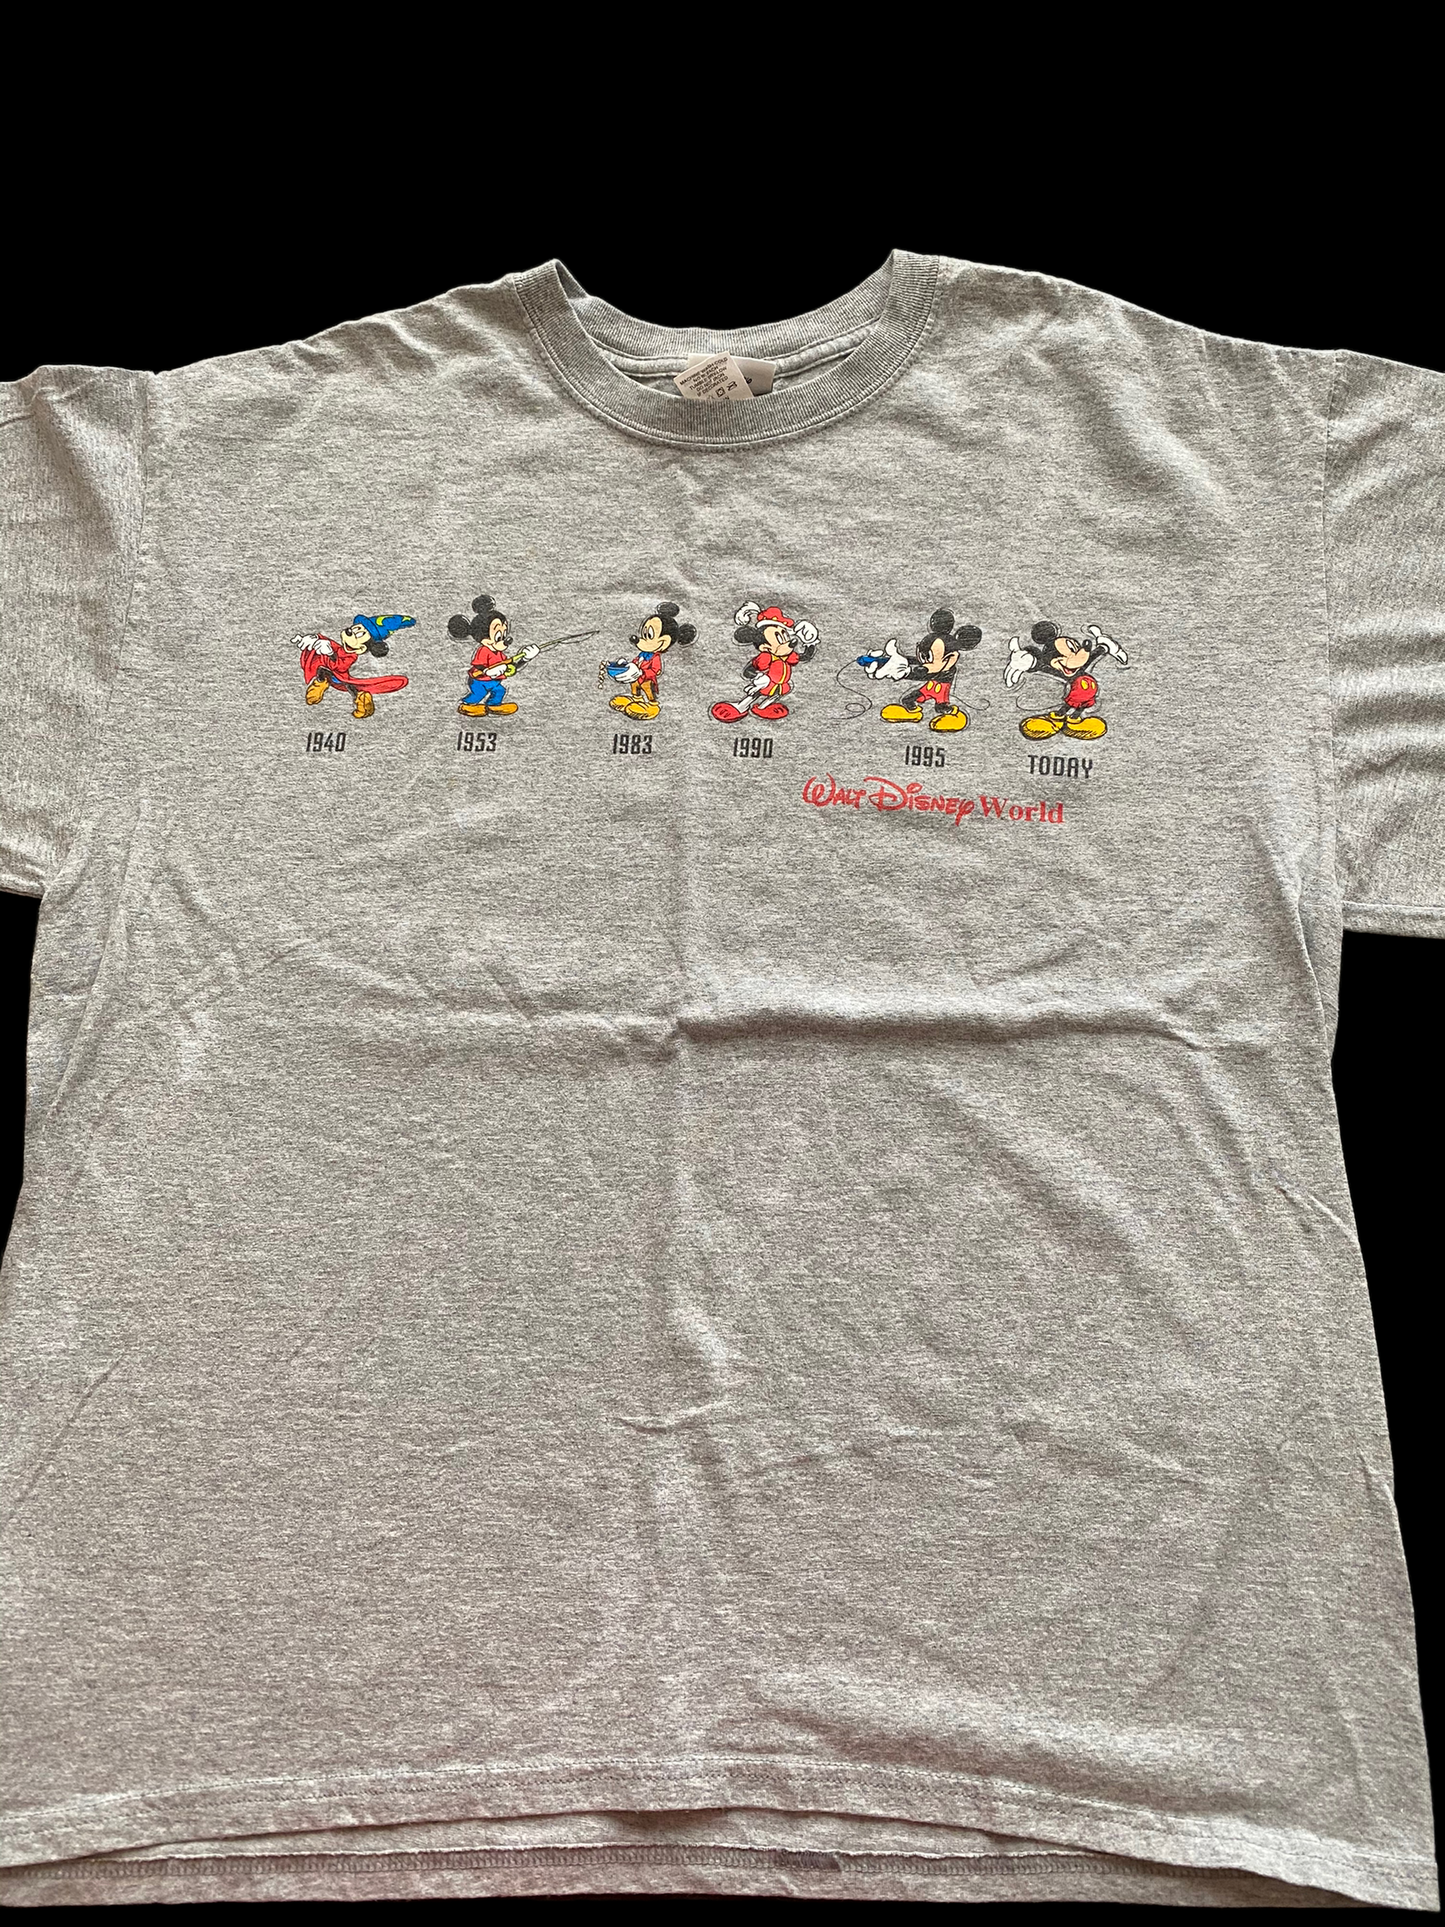 Walt Disney World Micky Mouse Chronological